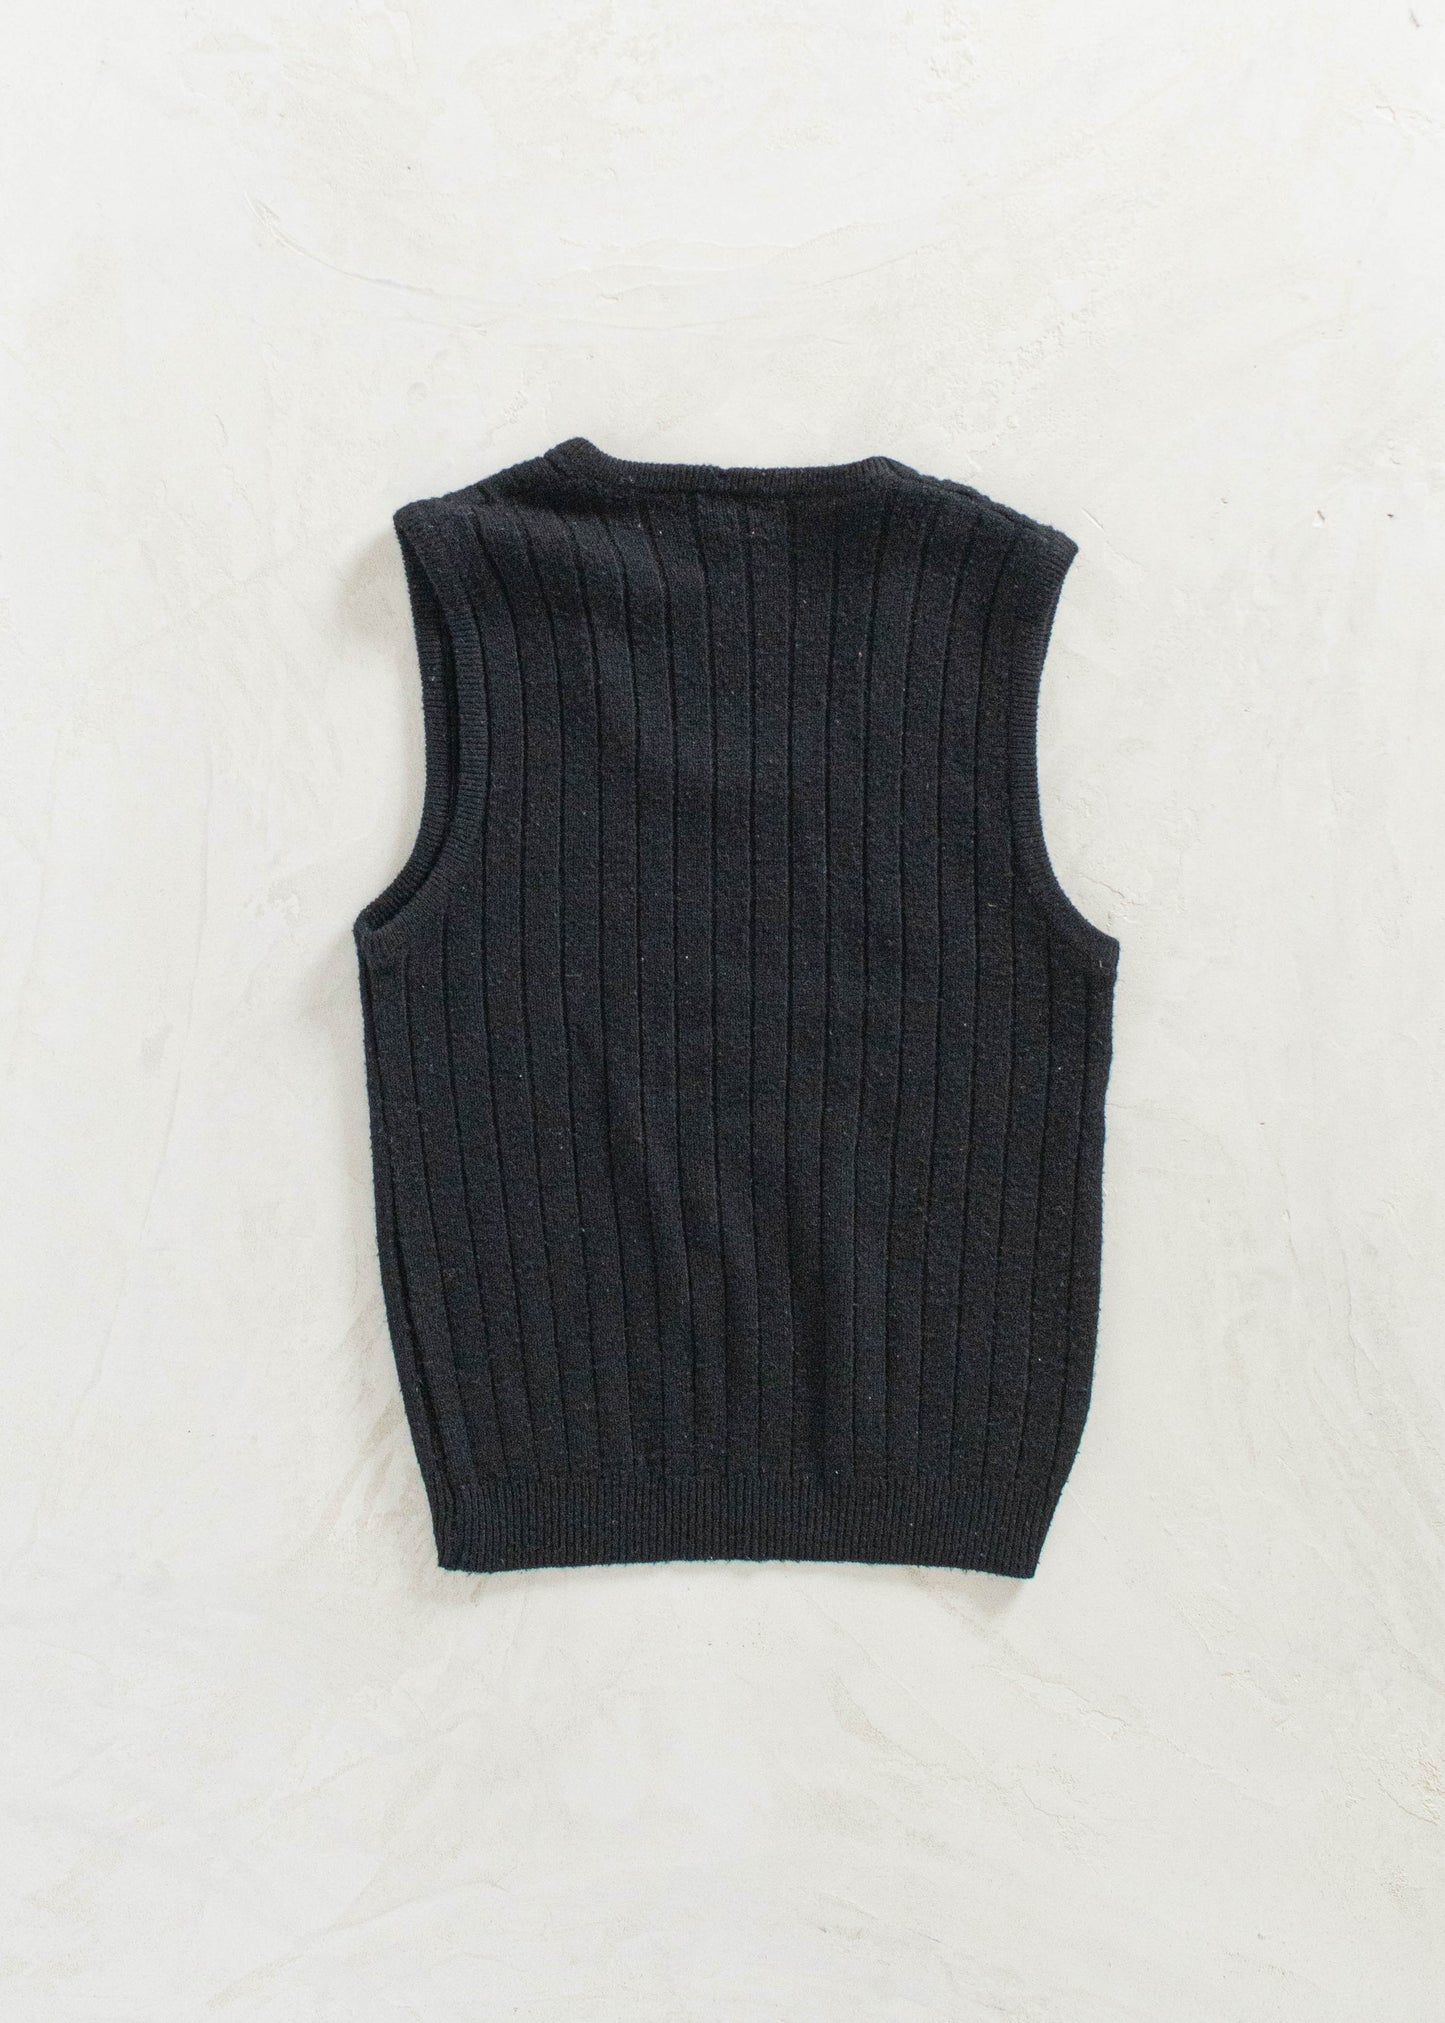 Vintage 1970s Drummond Sweater Vest Size XS/S